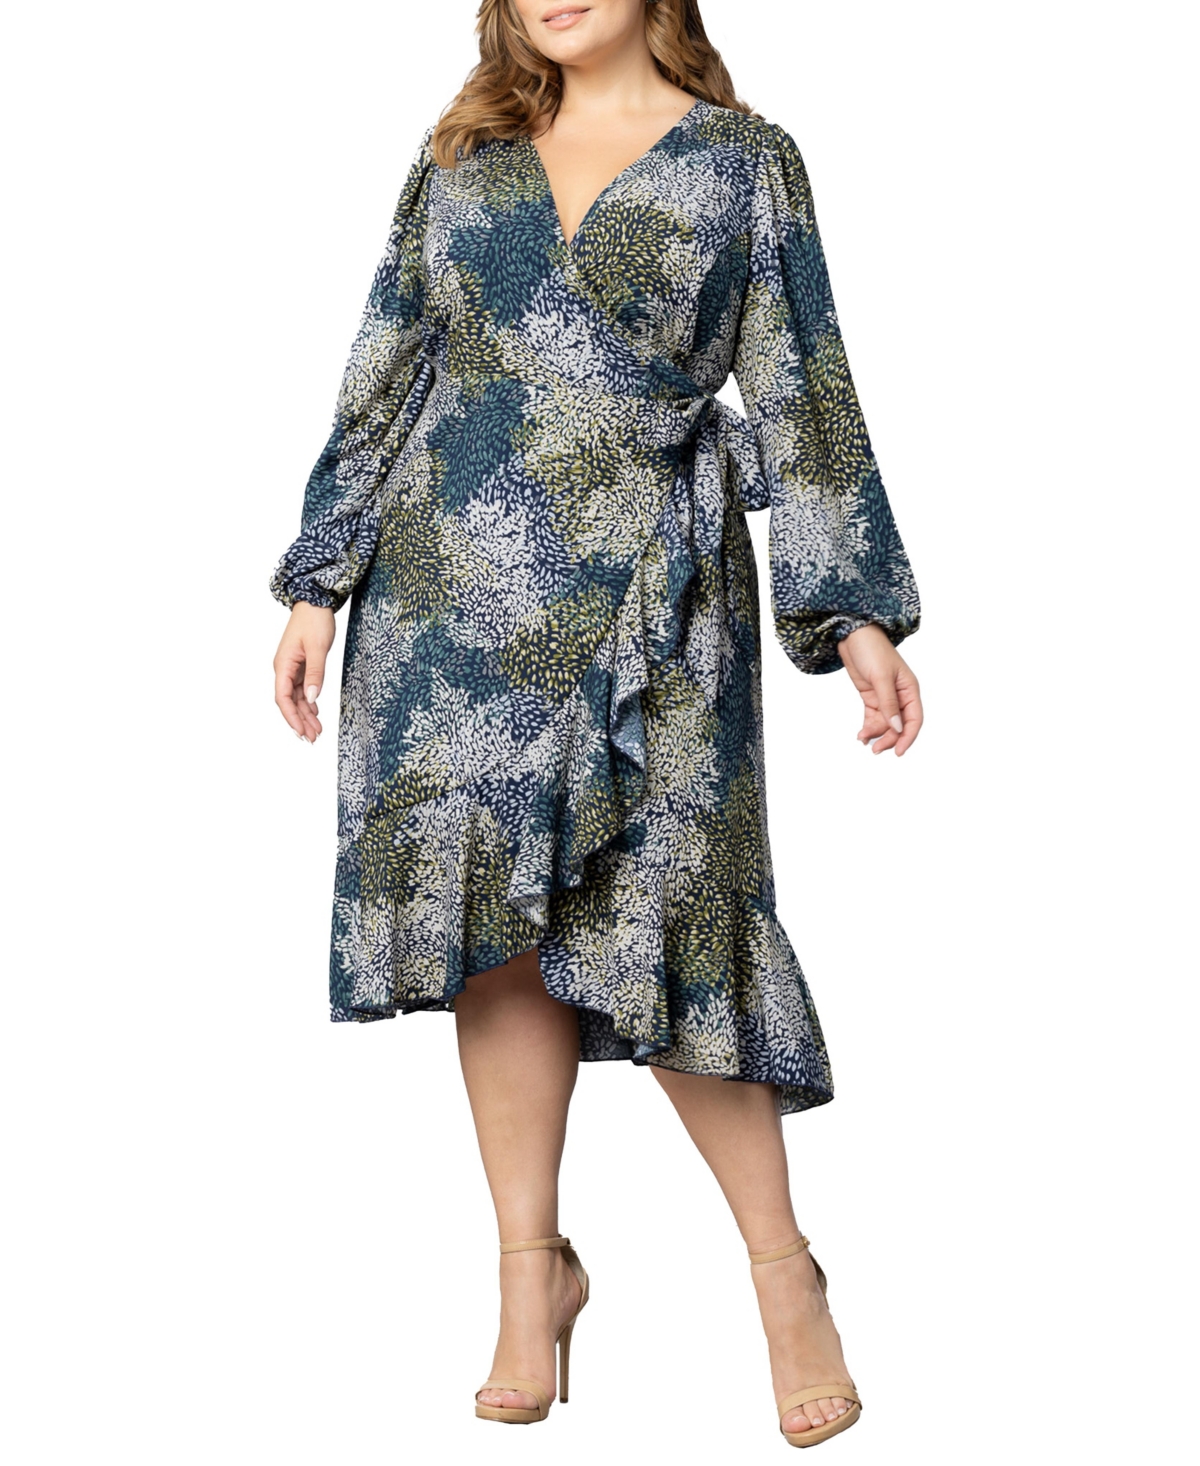 Women's Plus Size Julia Long Sleeve Wrap Dress - Blue impressionist print